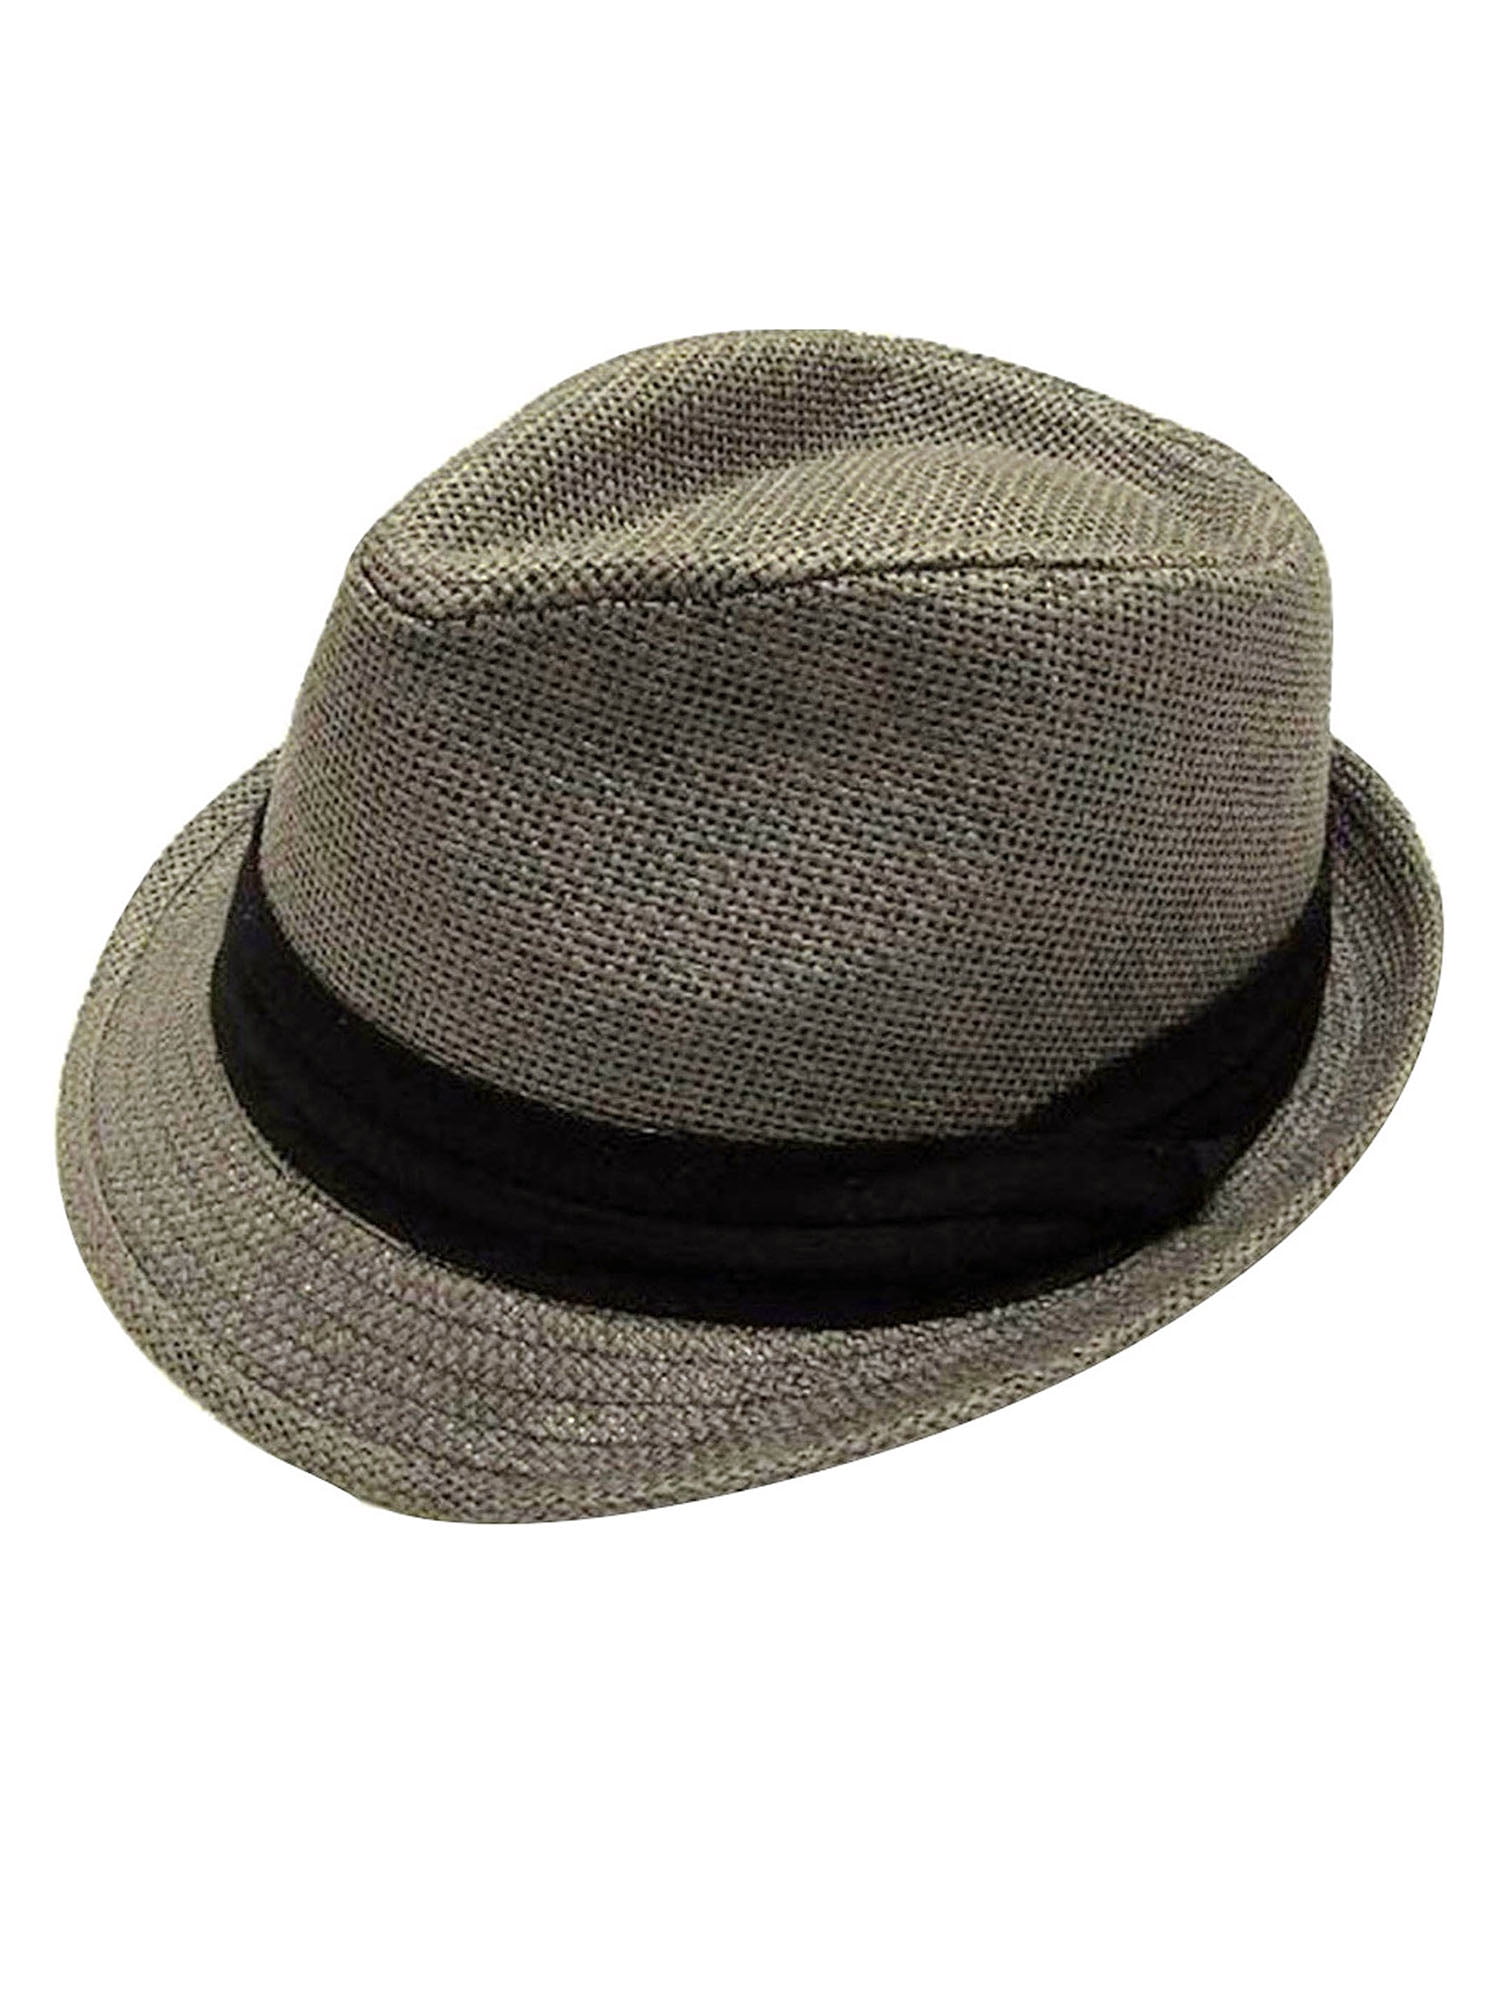 U2BUY Unisex Classic Fedora Hat Cotton Solid Color Short Brim Sun Hats 